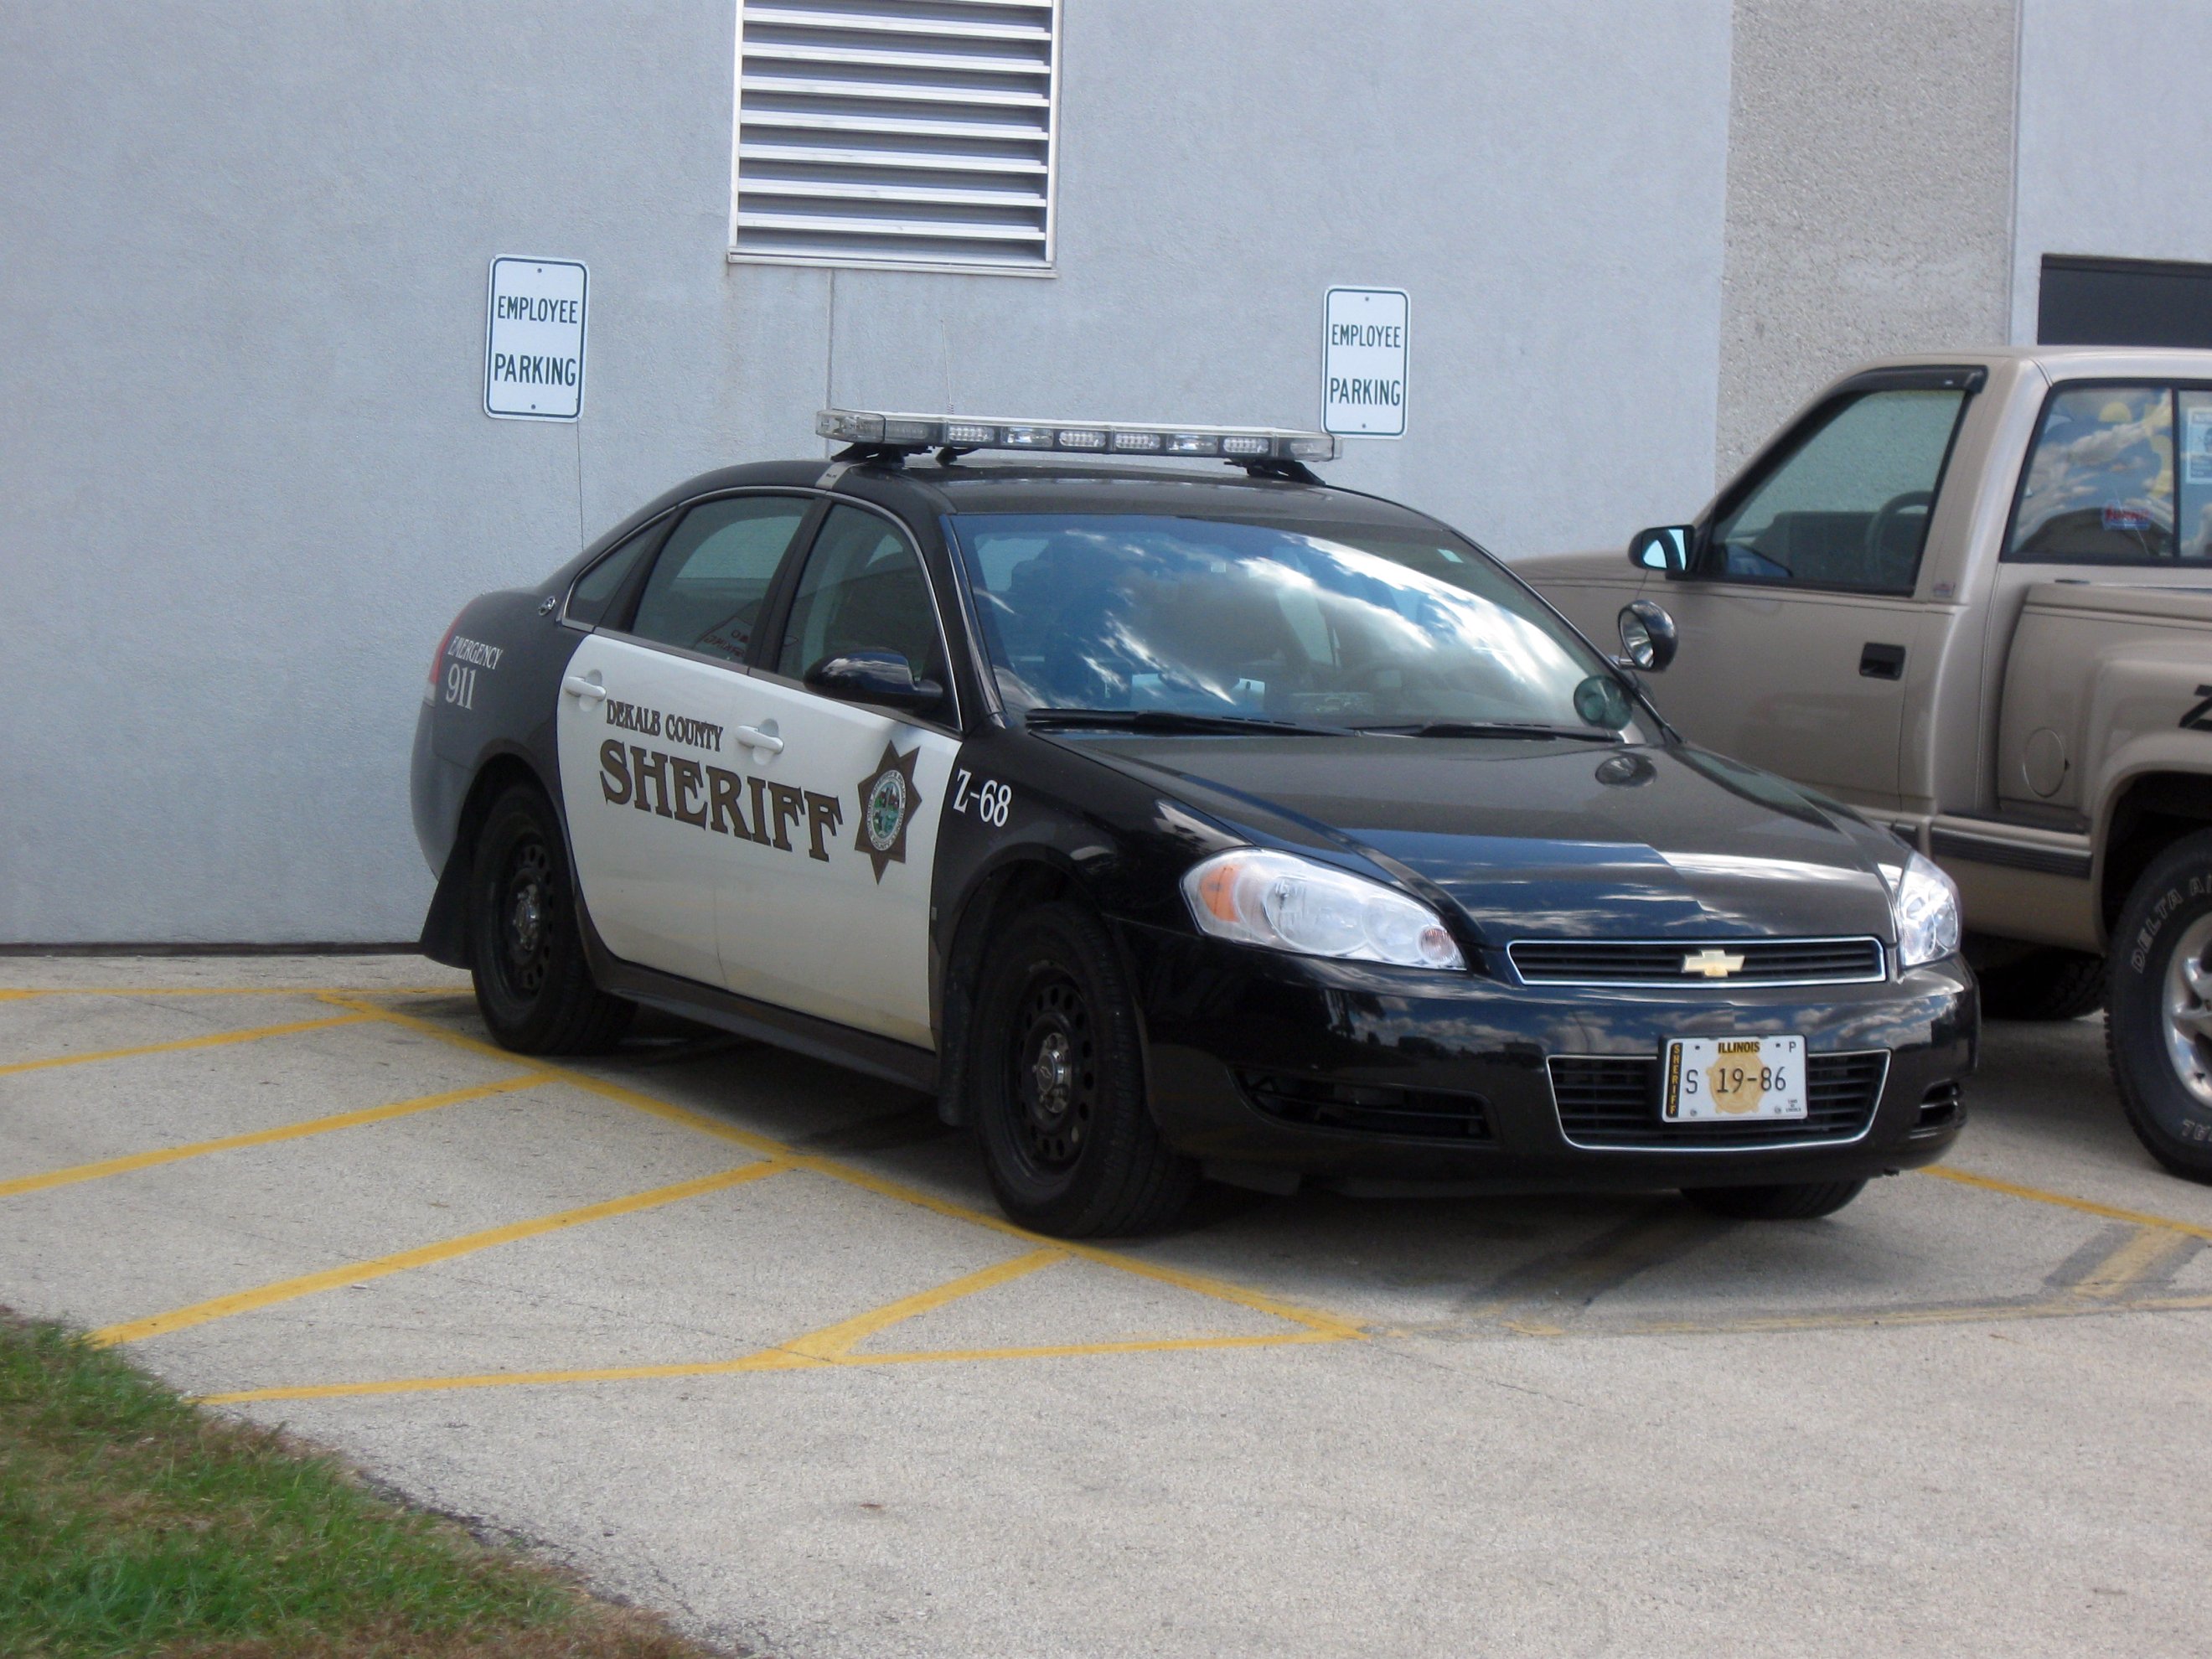 IL - Dekalb County Sheriff Department